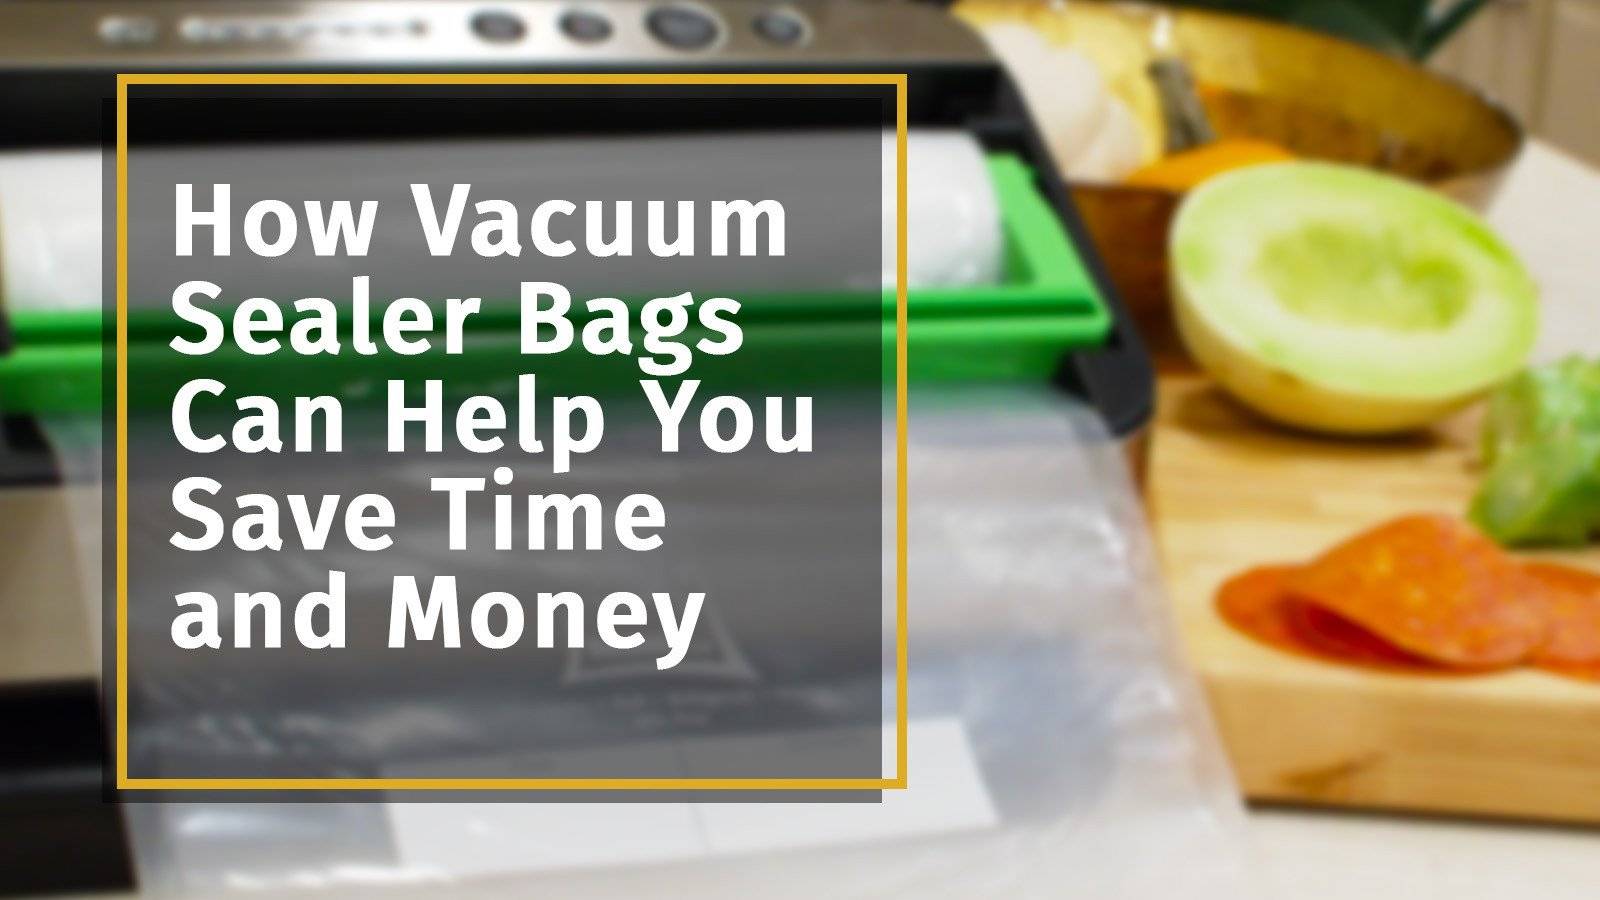 Wholesale Vacuum Storage Bag to Save Space and Make Storage Easier